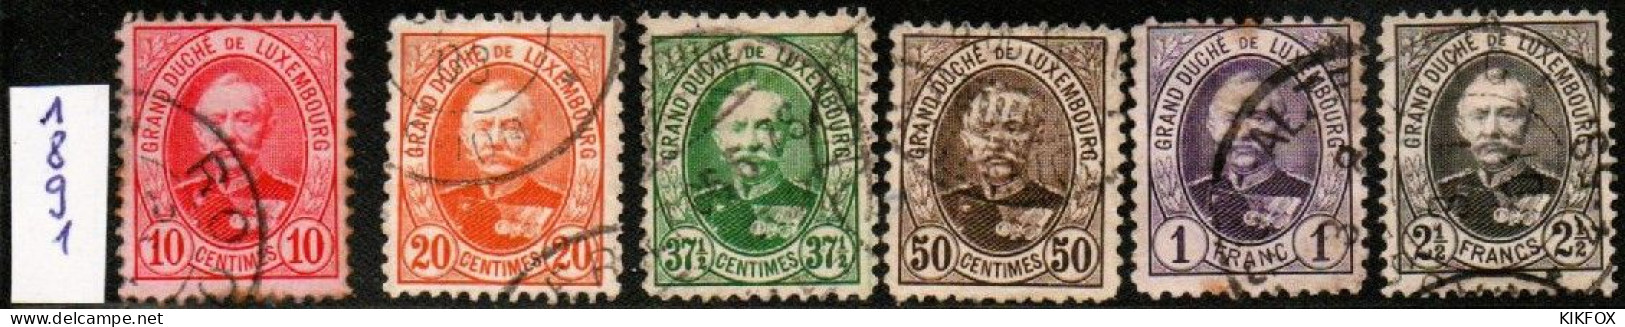 Luxembourg , Luxemburg ,1891, MI 57  59, 62, 63, 64, 65, GROSSHERZOG ADOLF, GESTEMPELT,OBLITERE, - 1895 Adolphe Right-hand Side